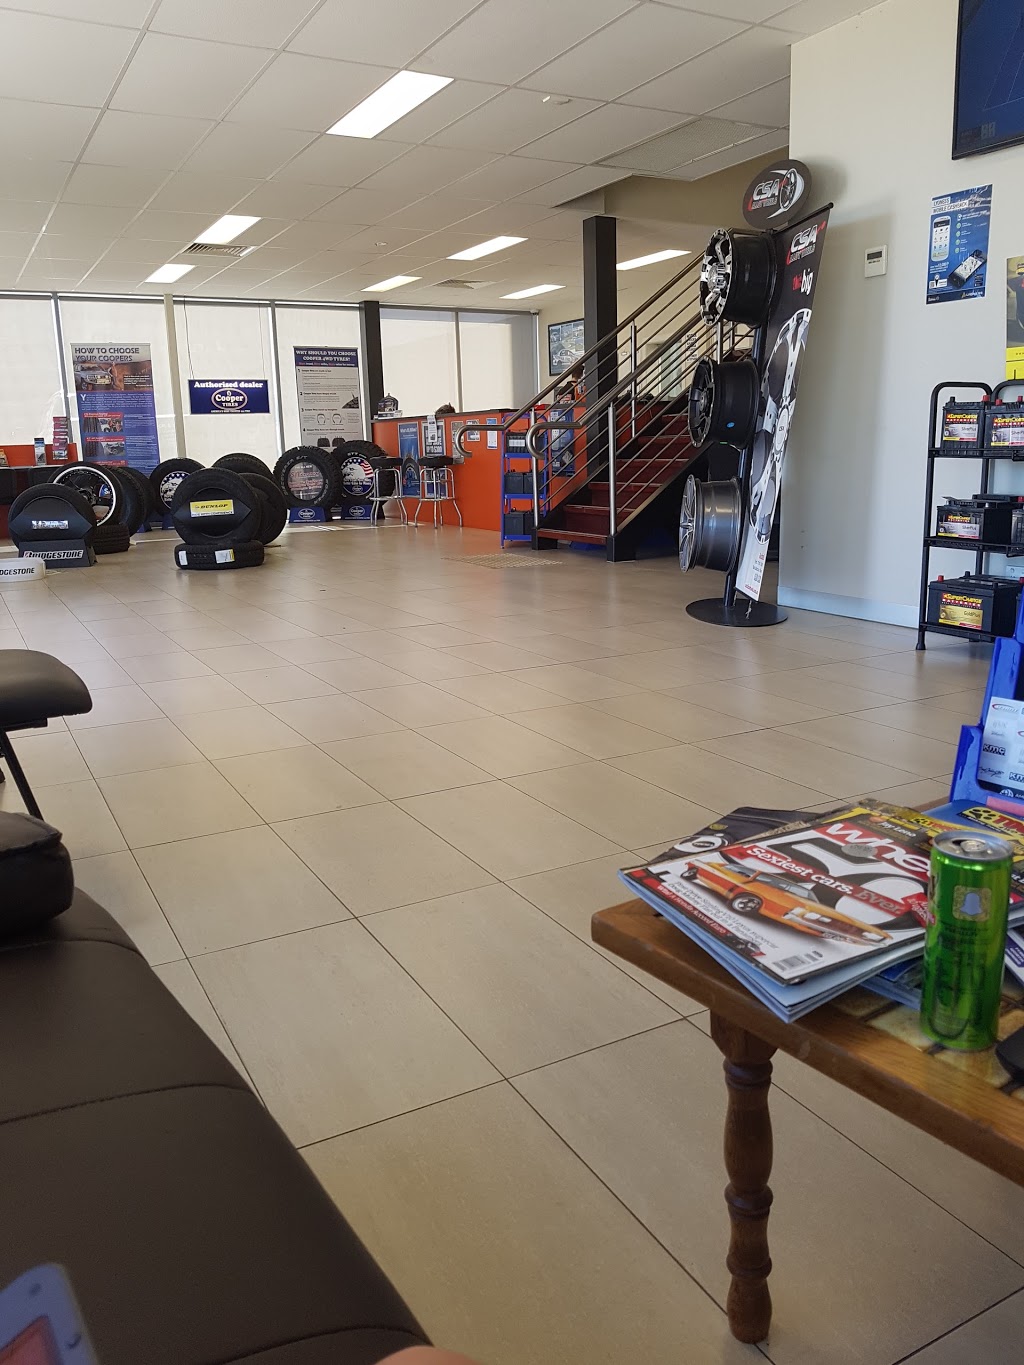 Tyreright Pakenham (Pakenham Tyres) | car repair | 1/6 Southeast Blvd, Pakenham VIC 3810, Australia | 0359409582 OR +61 3 5940 9582